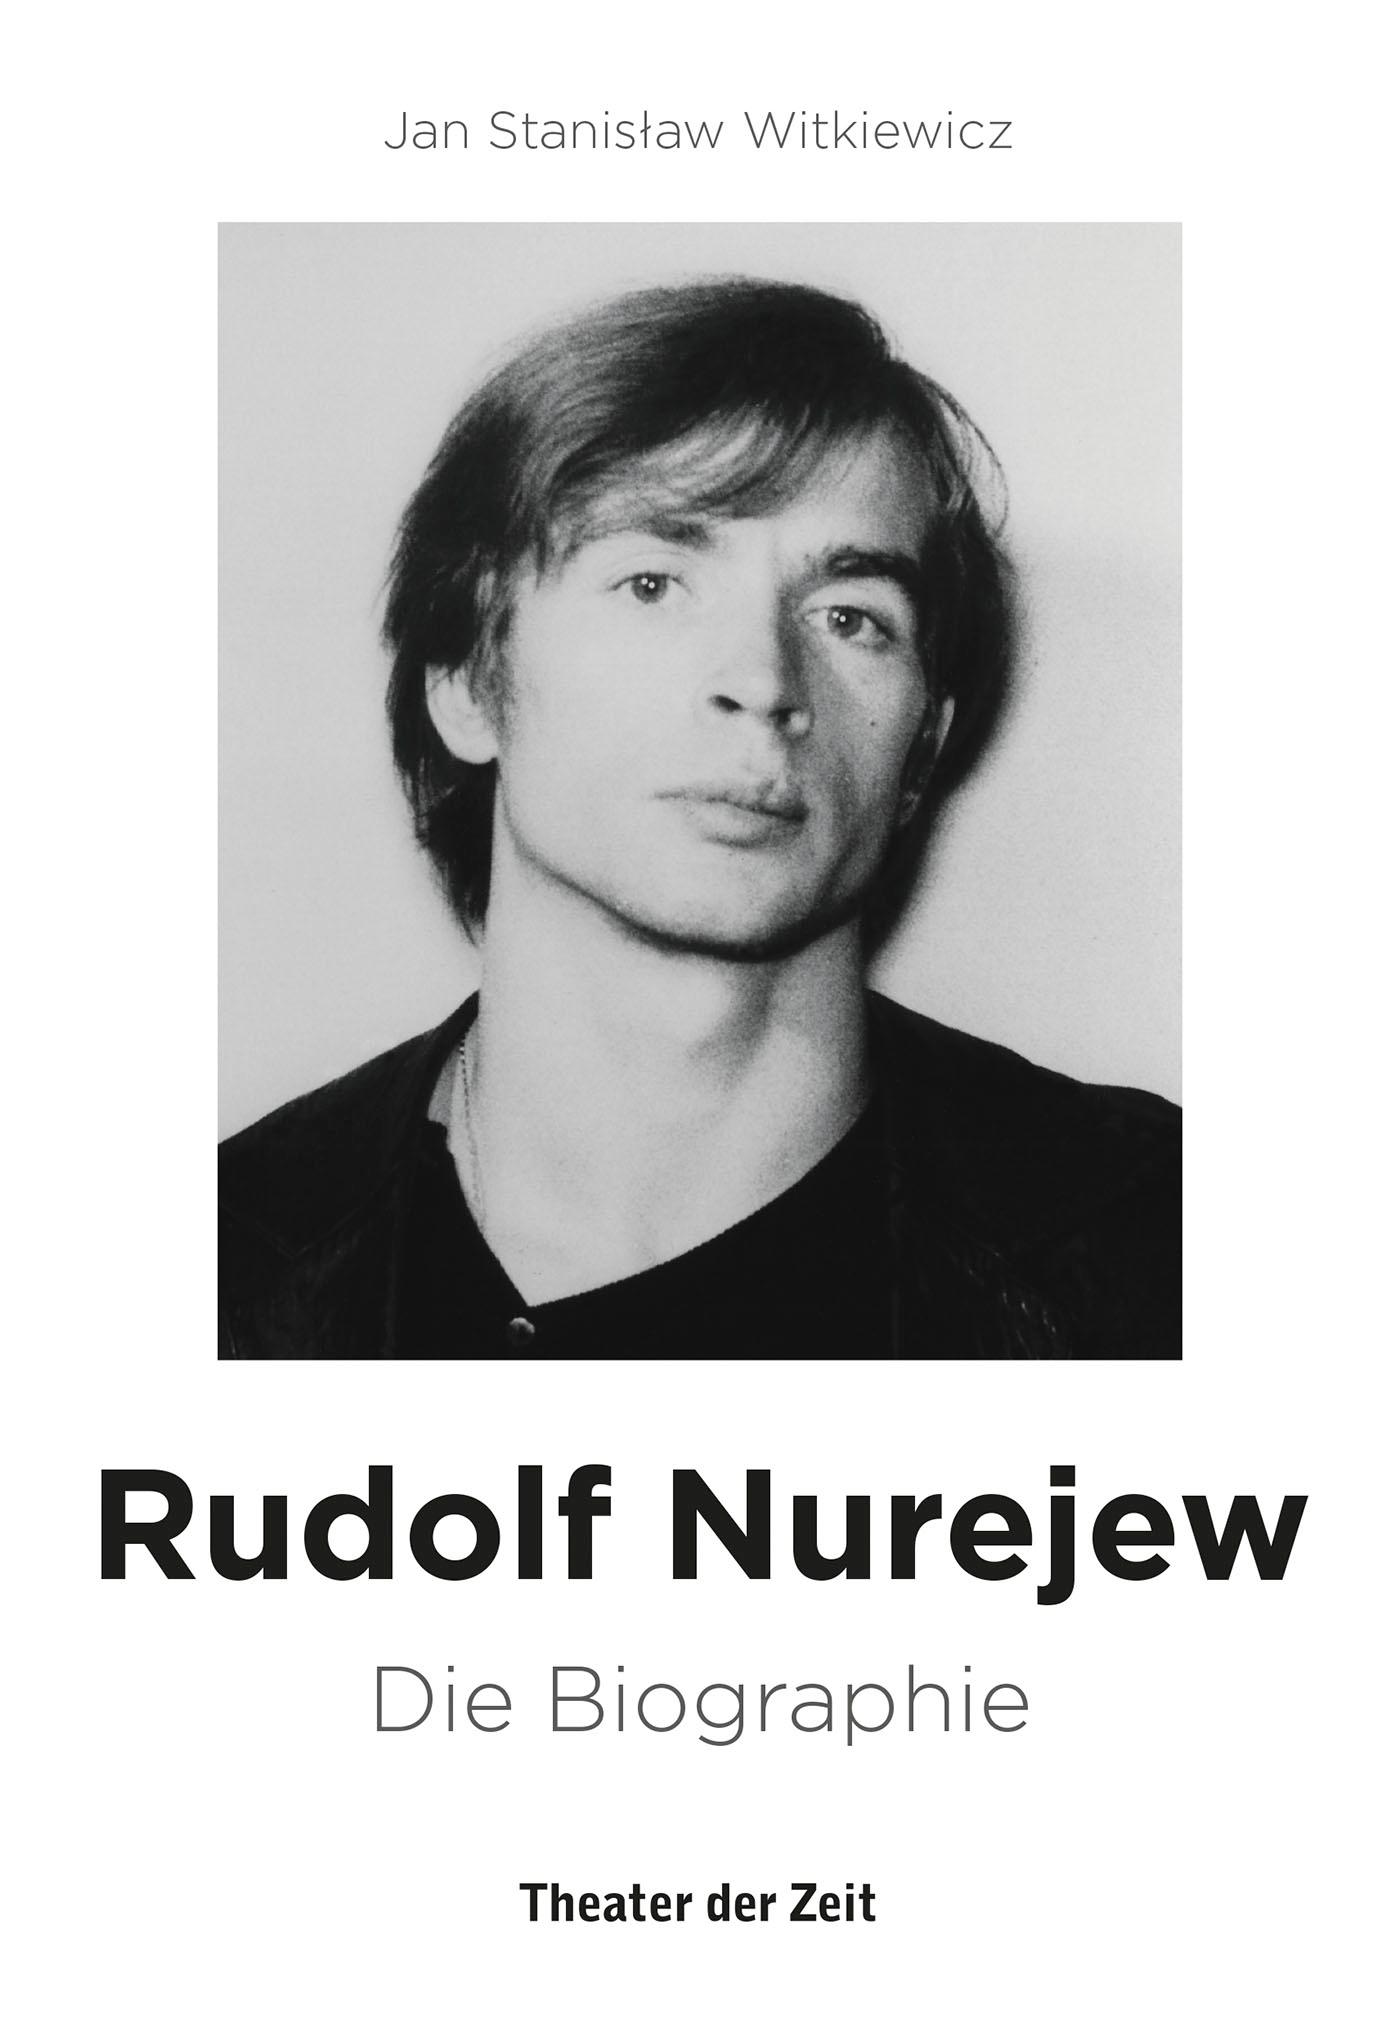 "Rudolf Nurejew"